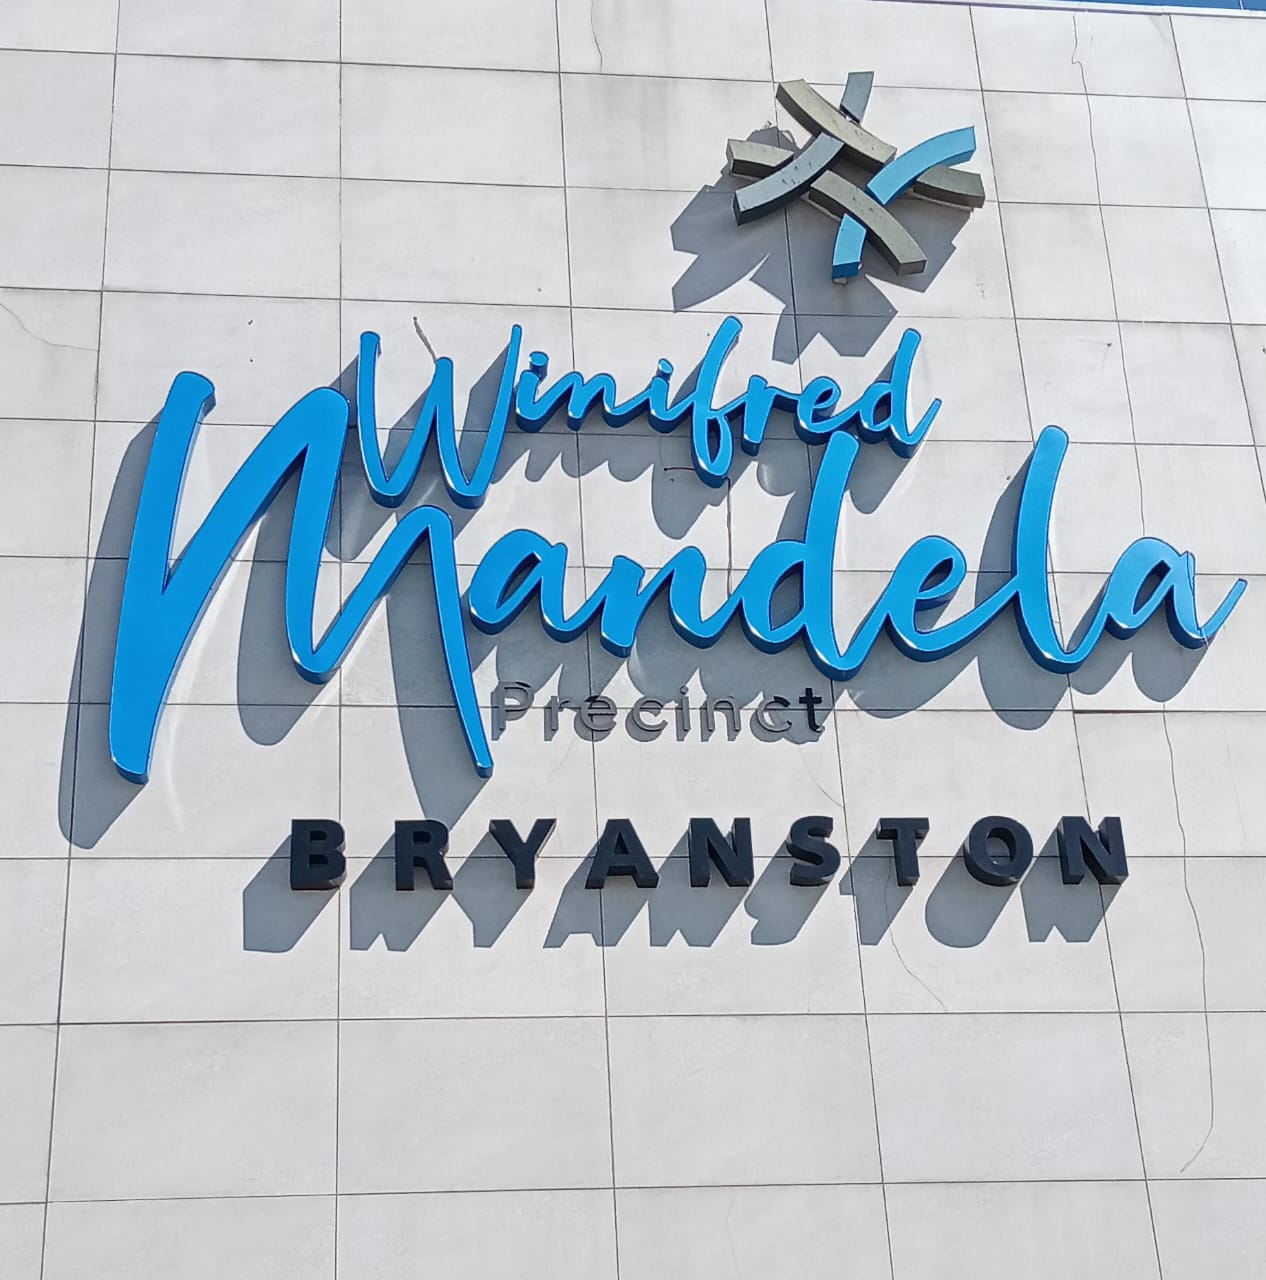 Transformation In Johannesburg: Nicolway Centre Becomes Winifred Mandela Precinct 1